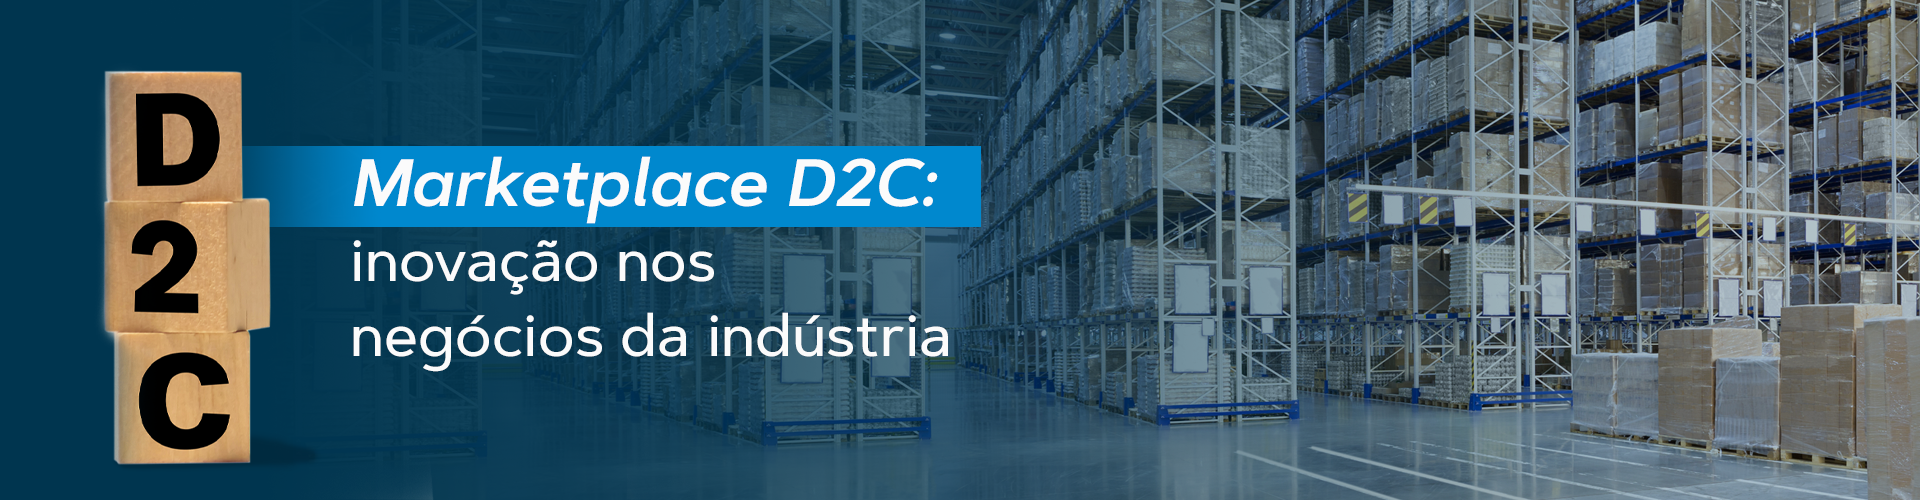 Markerplace D2C para indústria